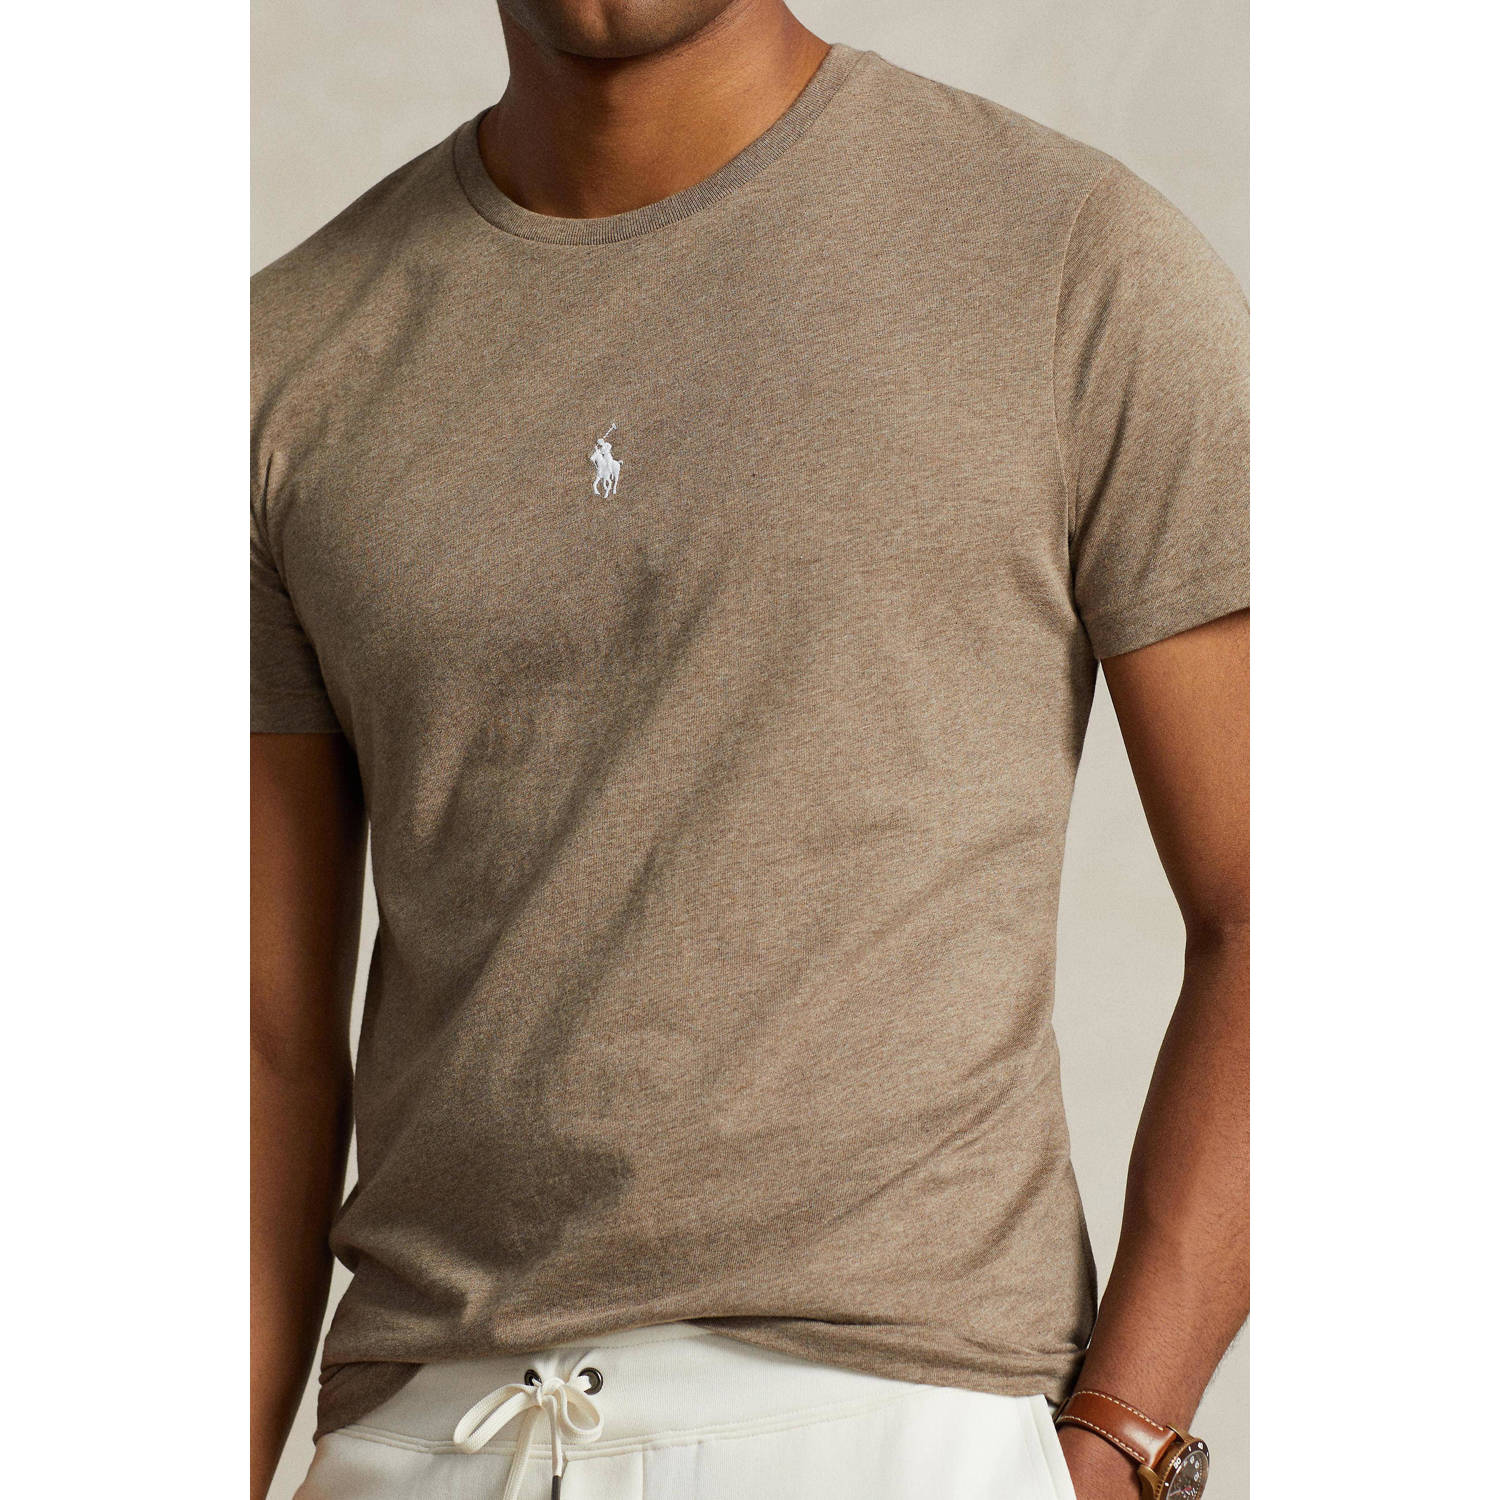 POLO Ralph Lauren slim fit T-shirt met logo dk taupe heather